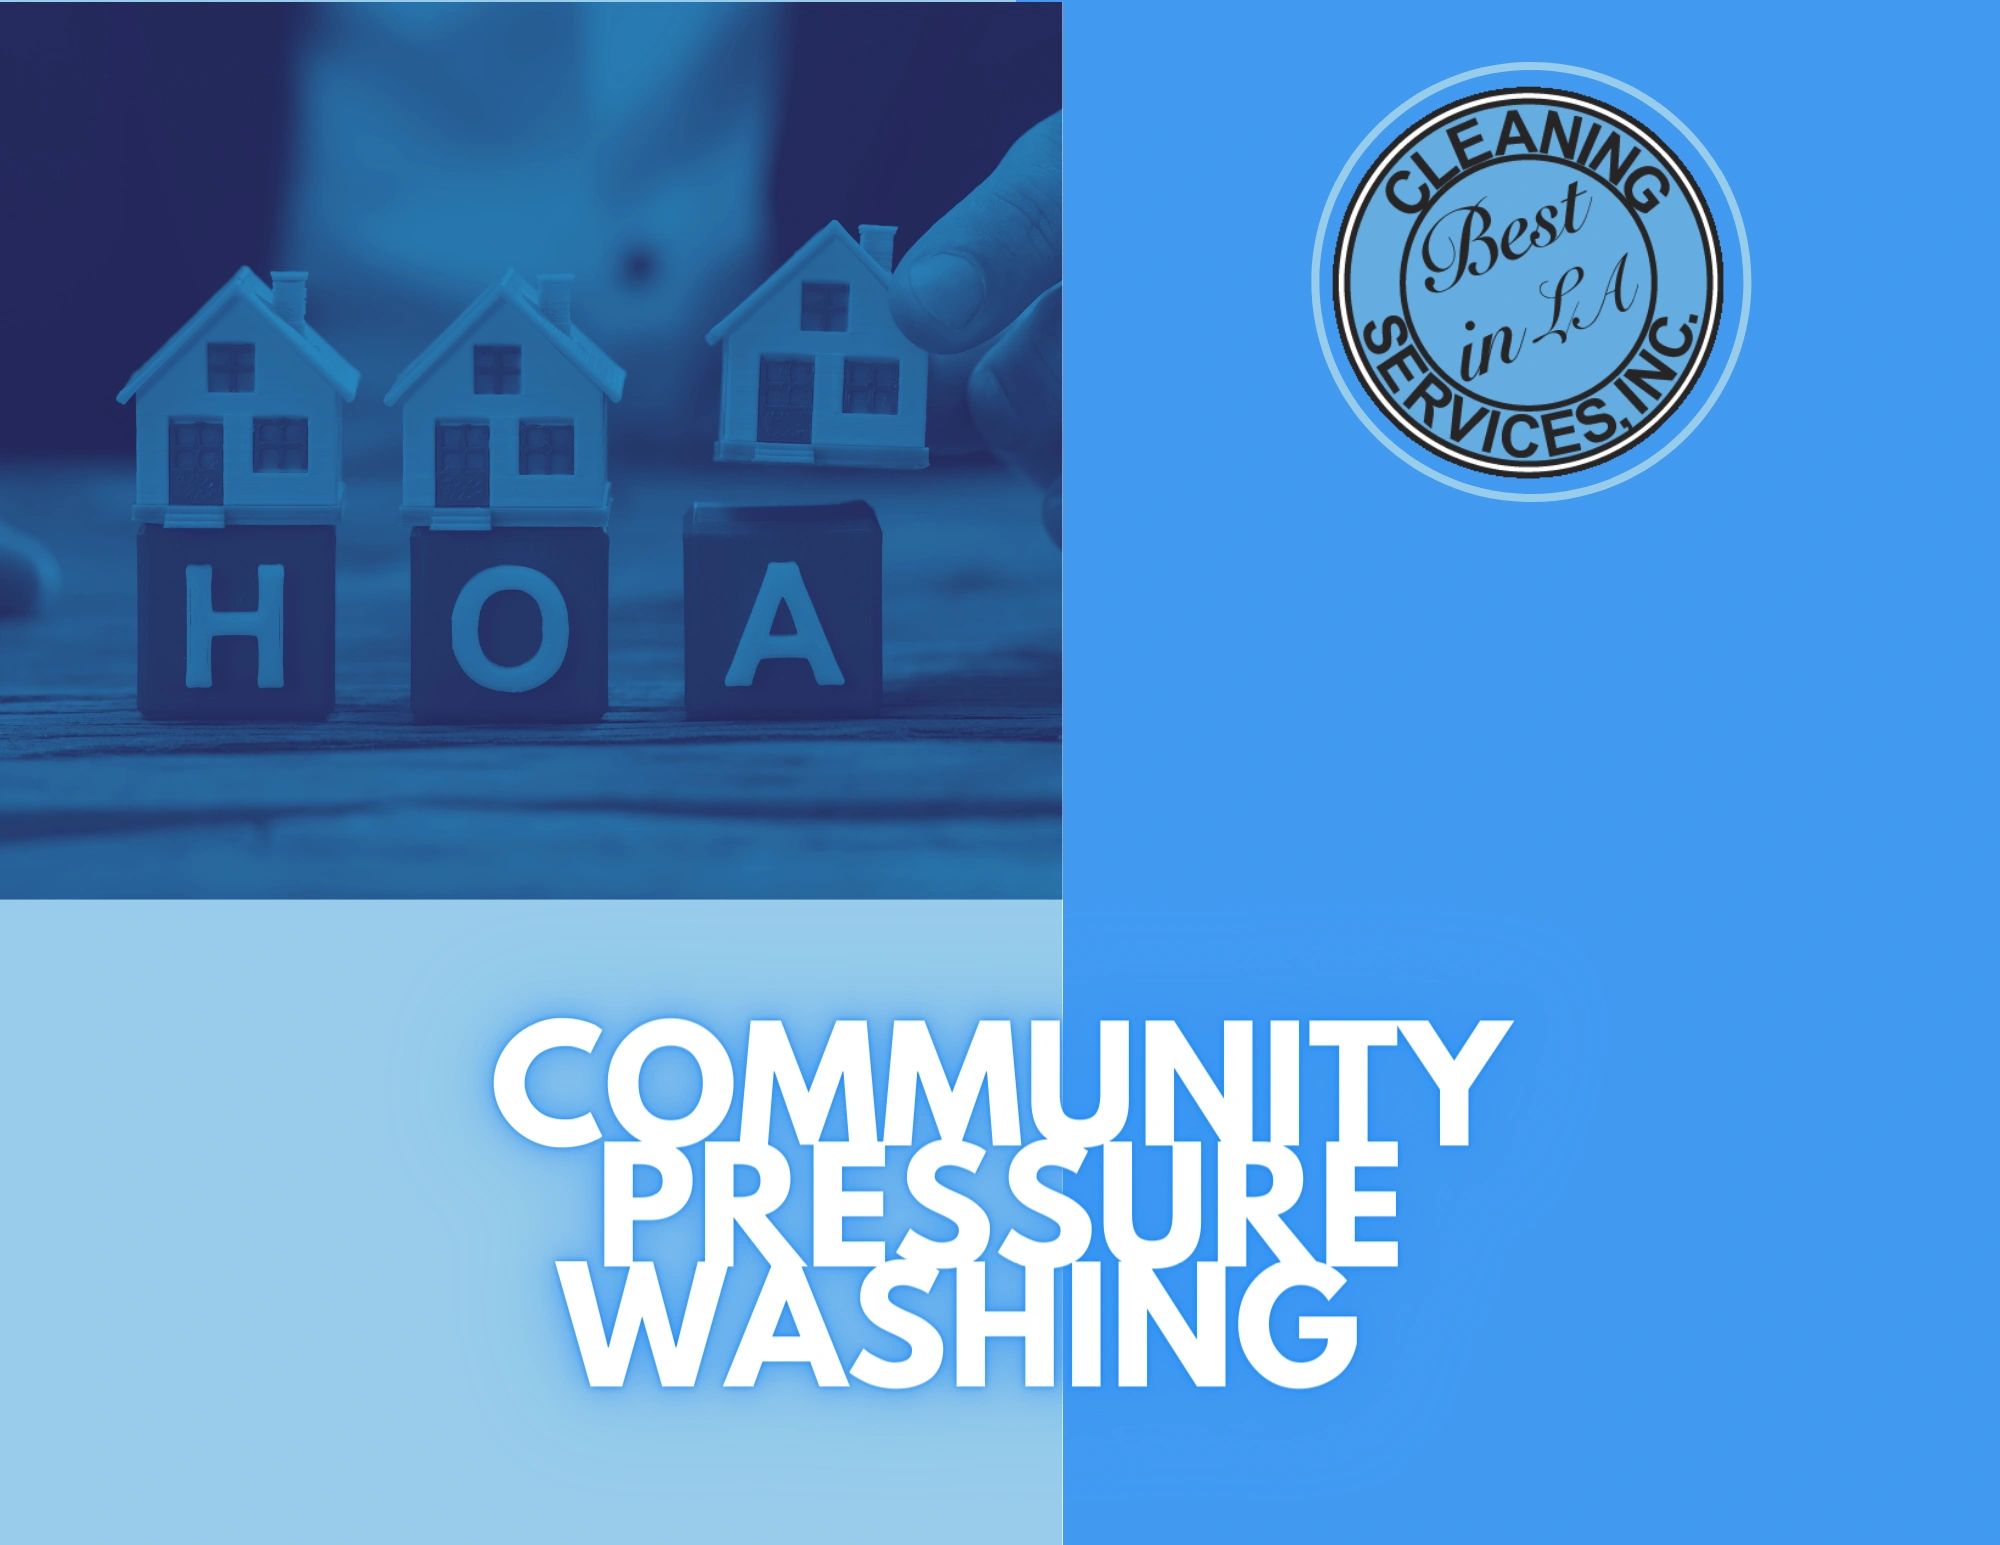 Community service pressure washing .